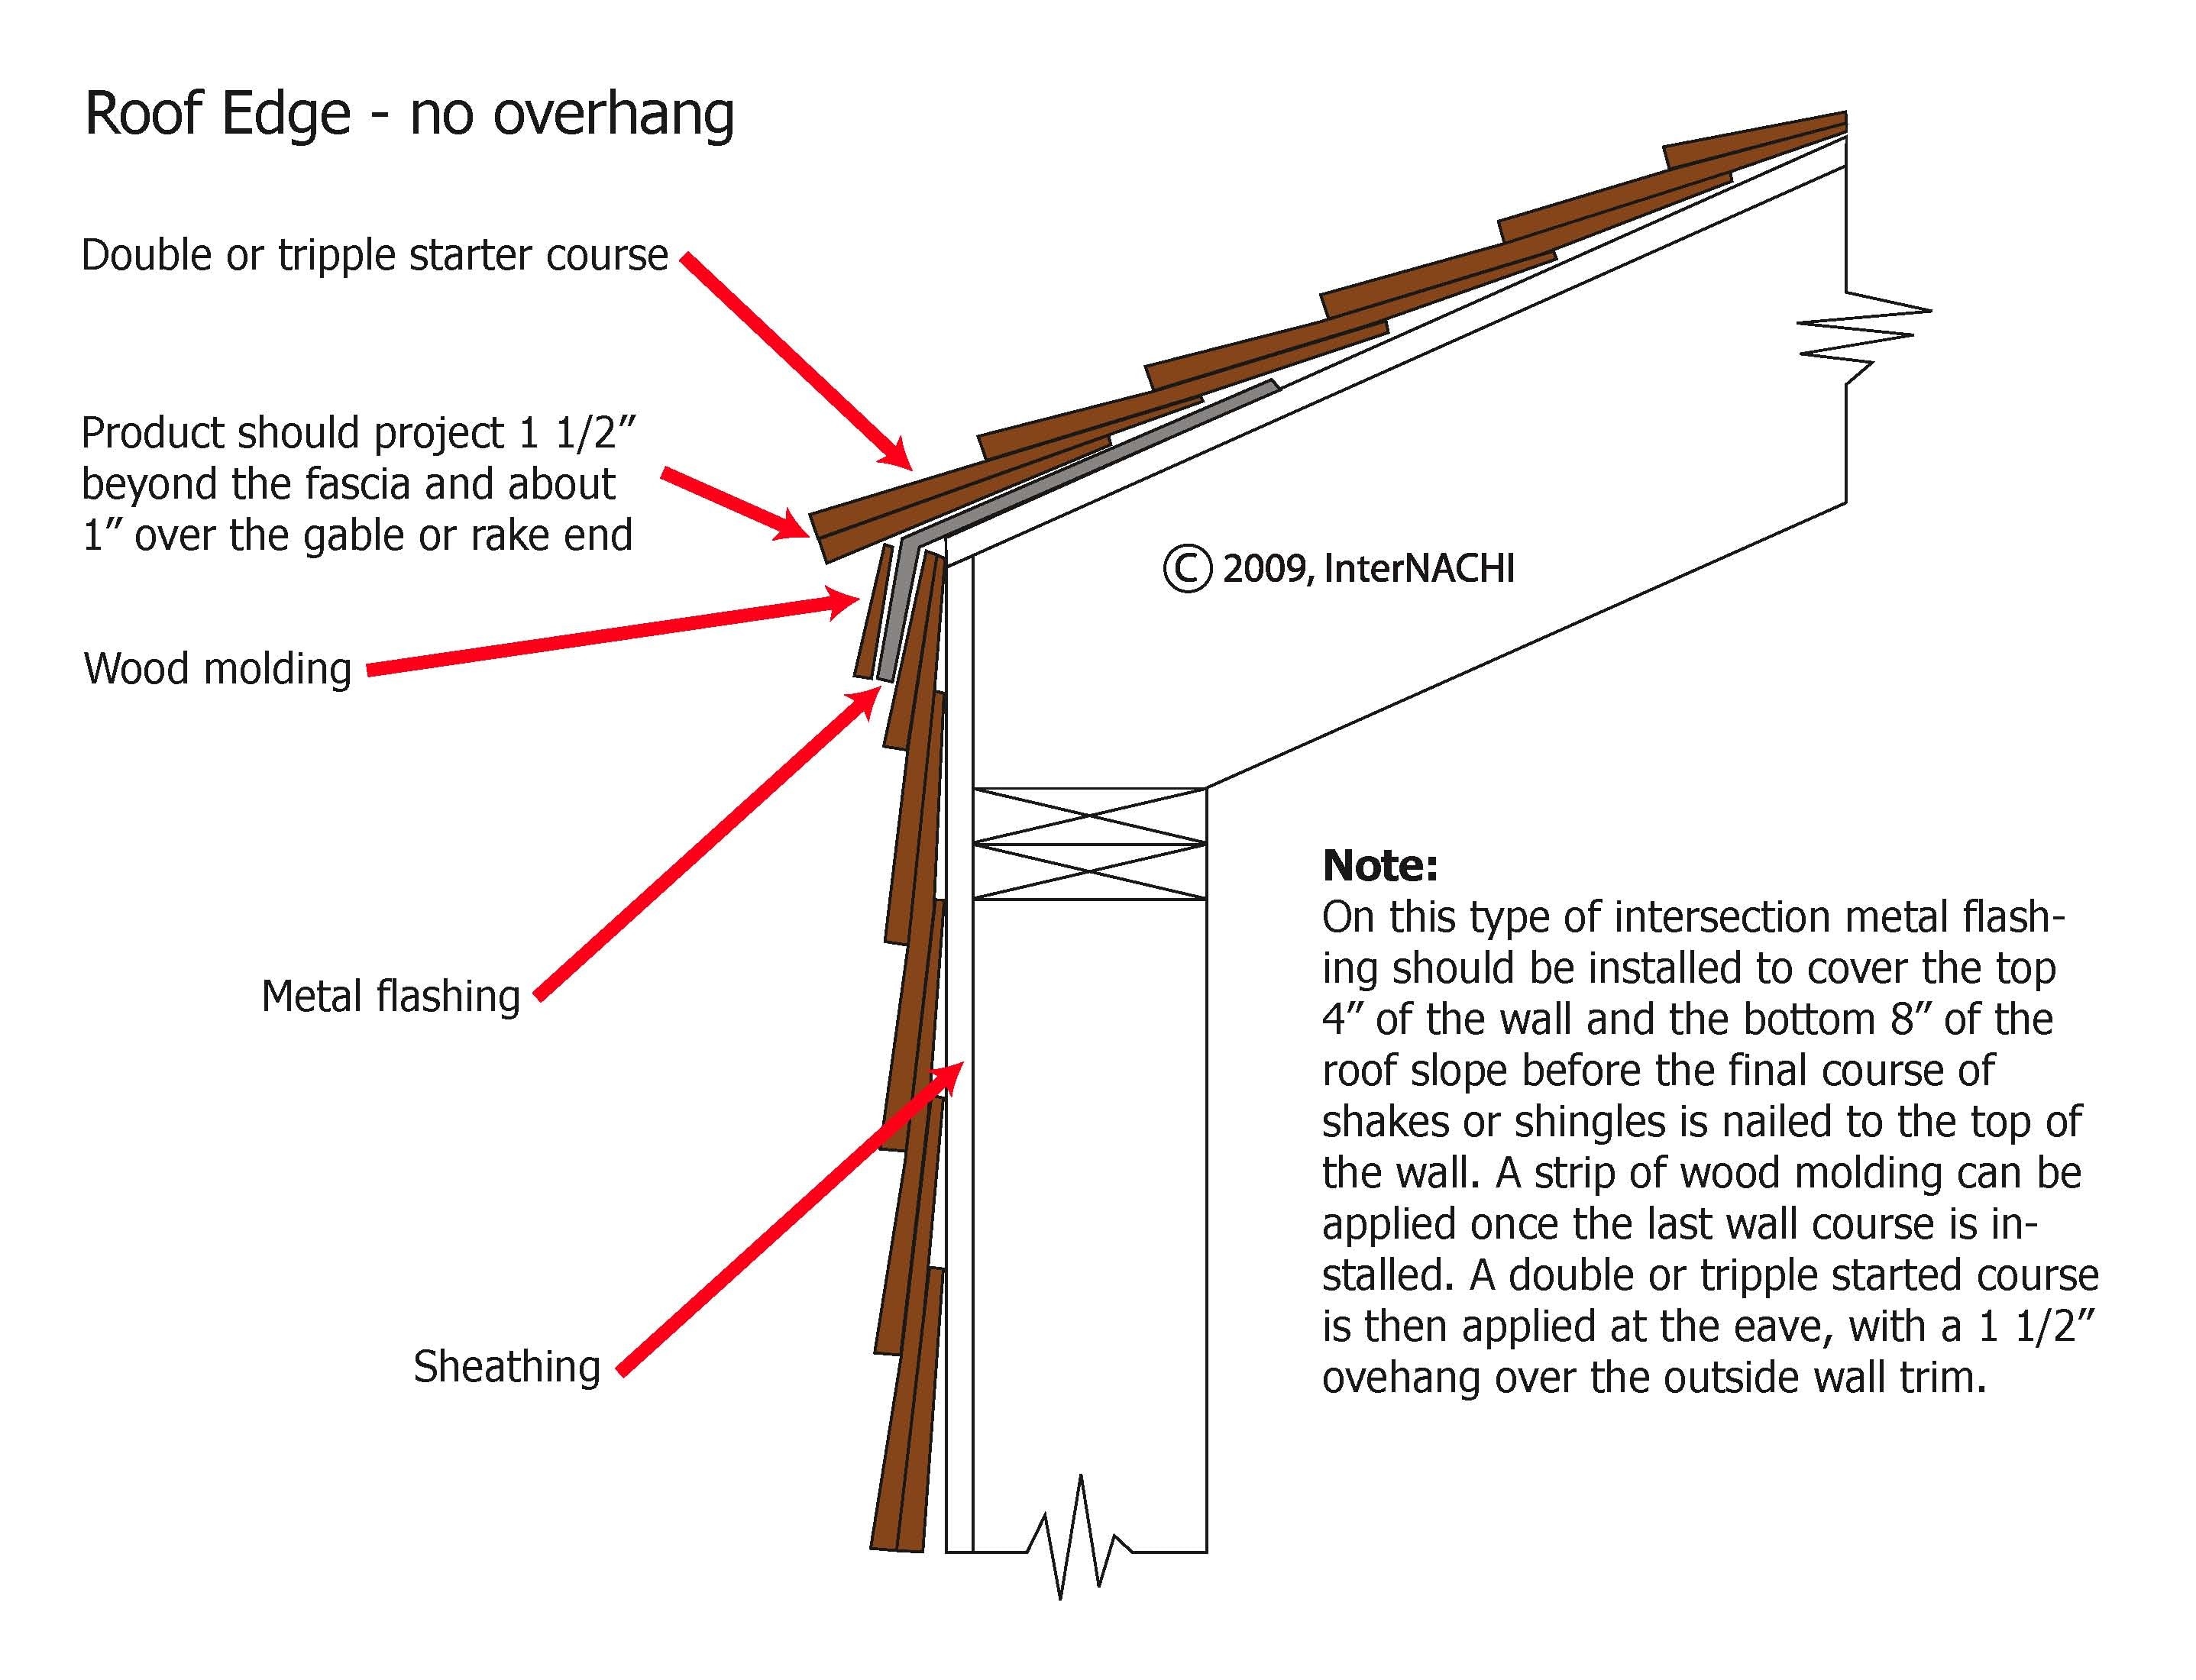 InterNACHI Inspection Graphics Library Roofing » Flashing » roofedgenooverhang.jpg